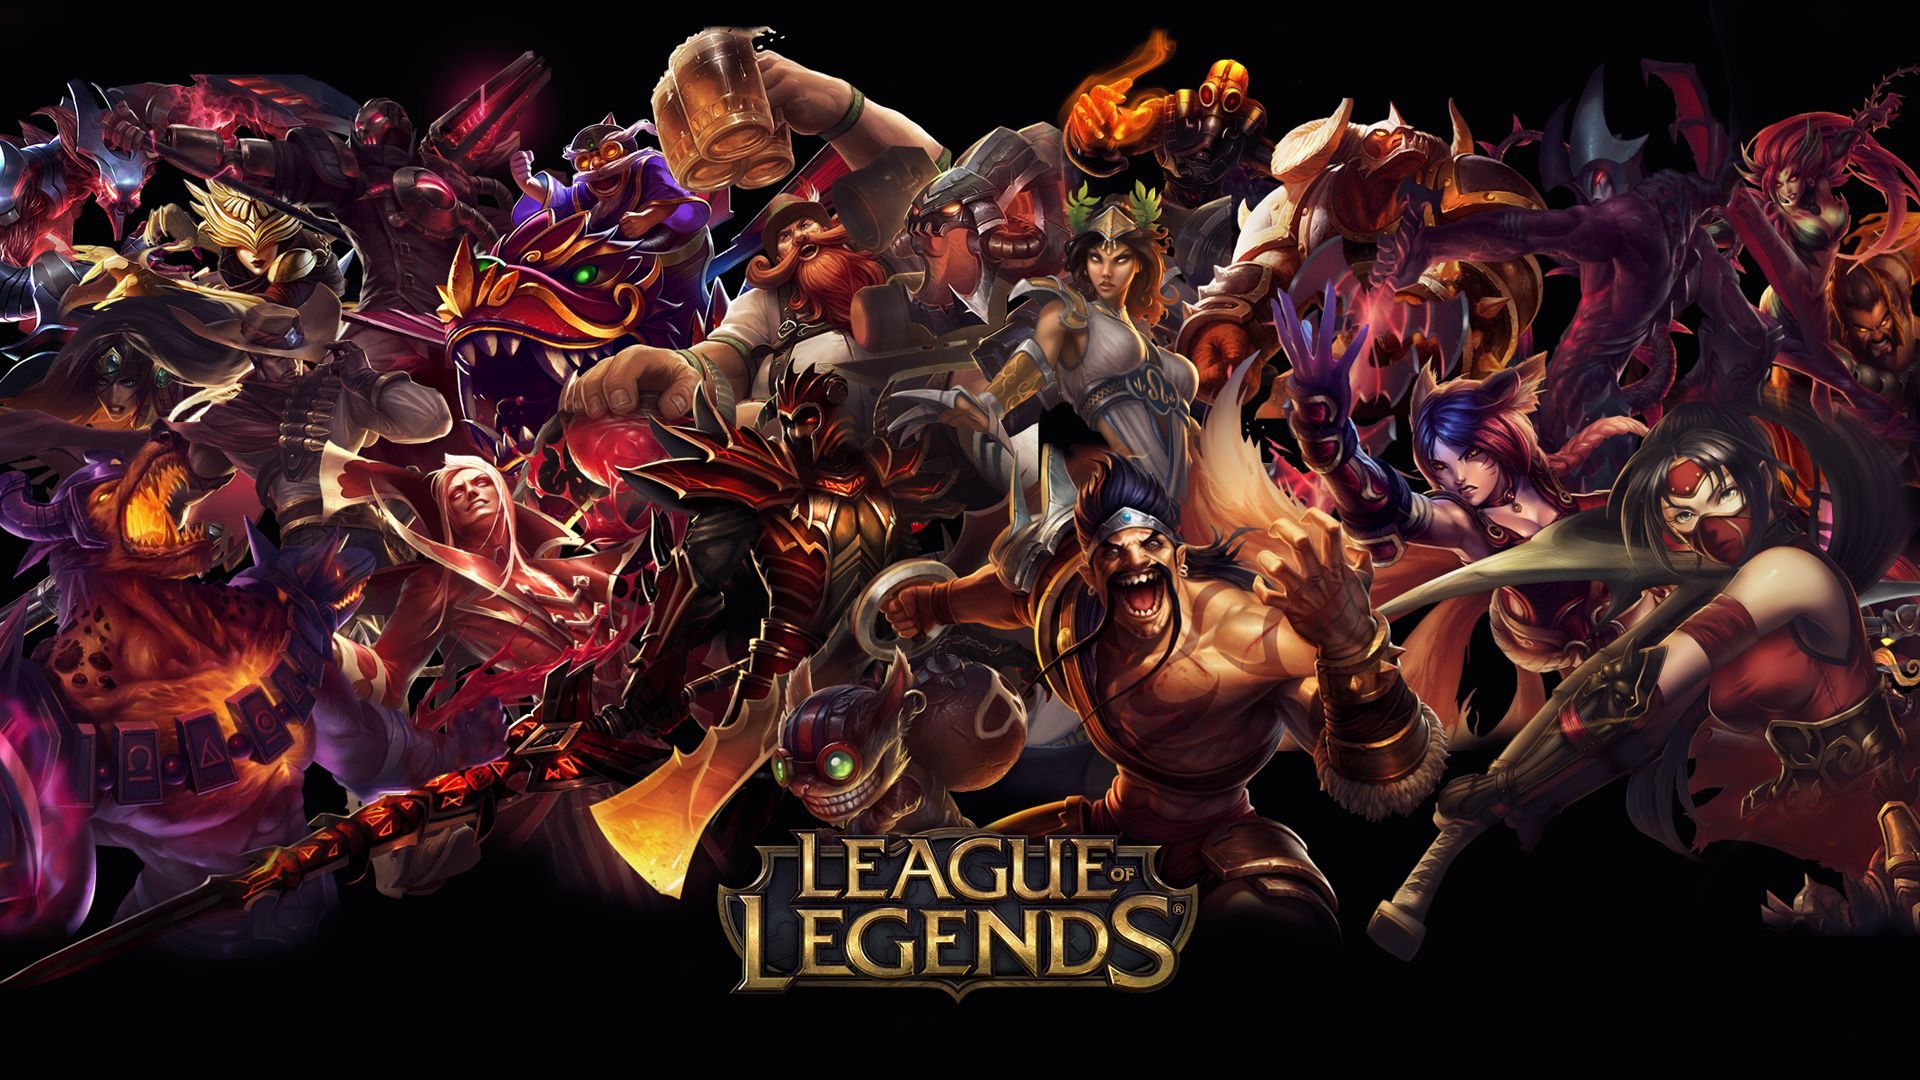 League of legends champions wallpaper